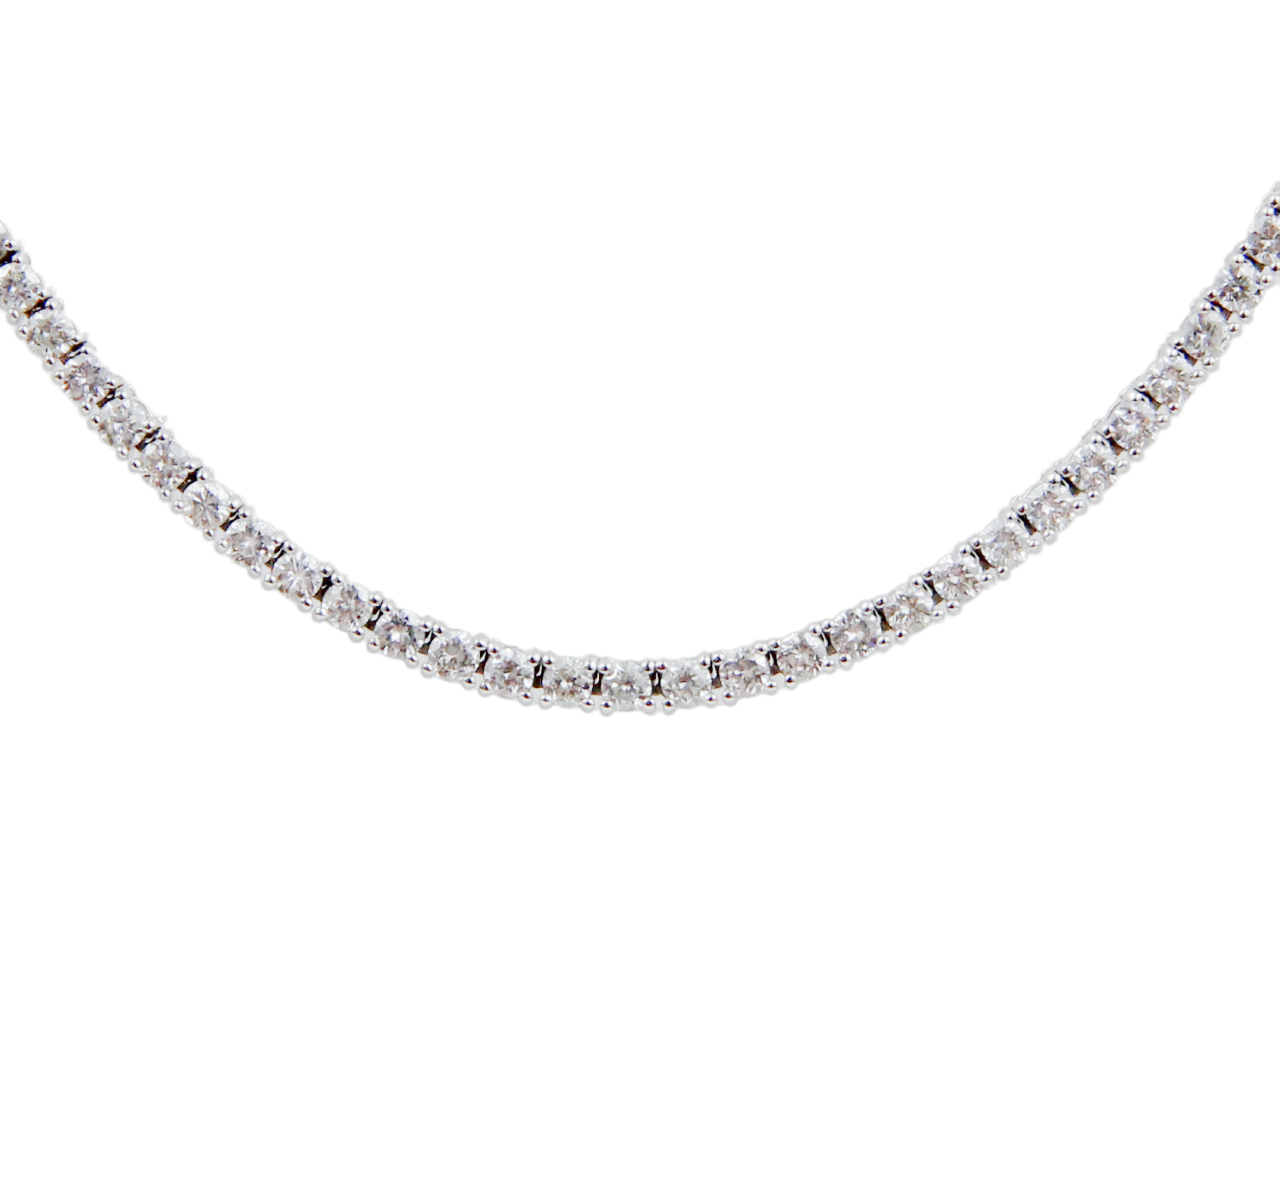 ECJ Collection 18K White Gold 7.08ctw Diamond Tennis Necklace